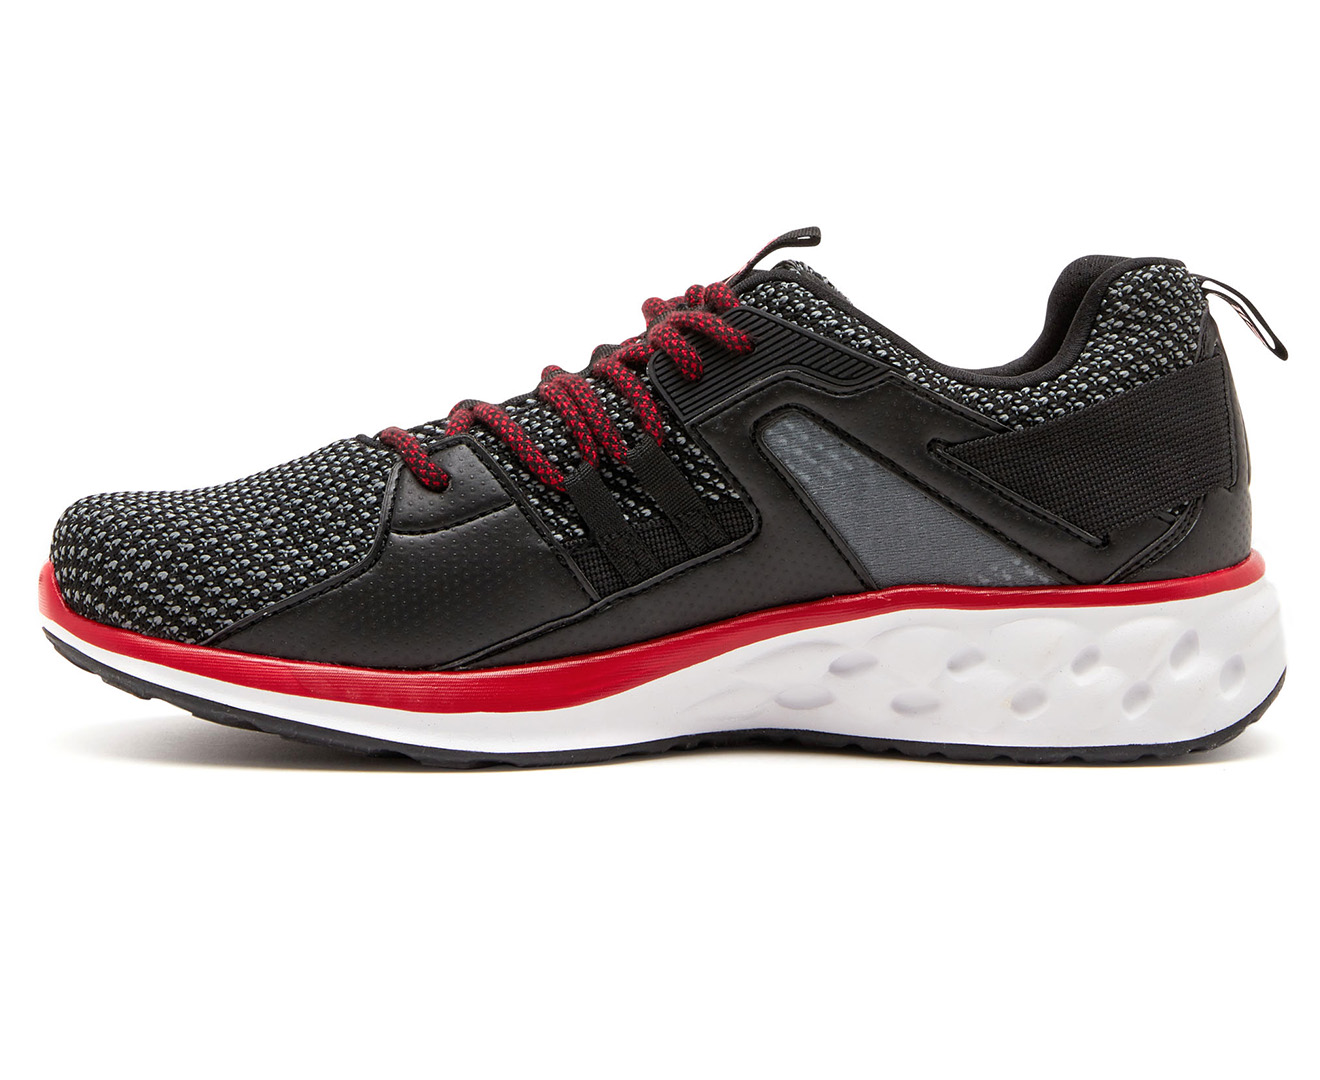 Fila Men's Fantastiq Energized Running Shoes - Black/Red/White | Catch ...